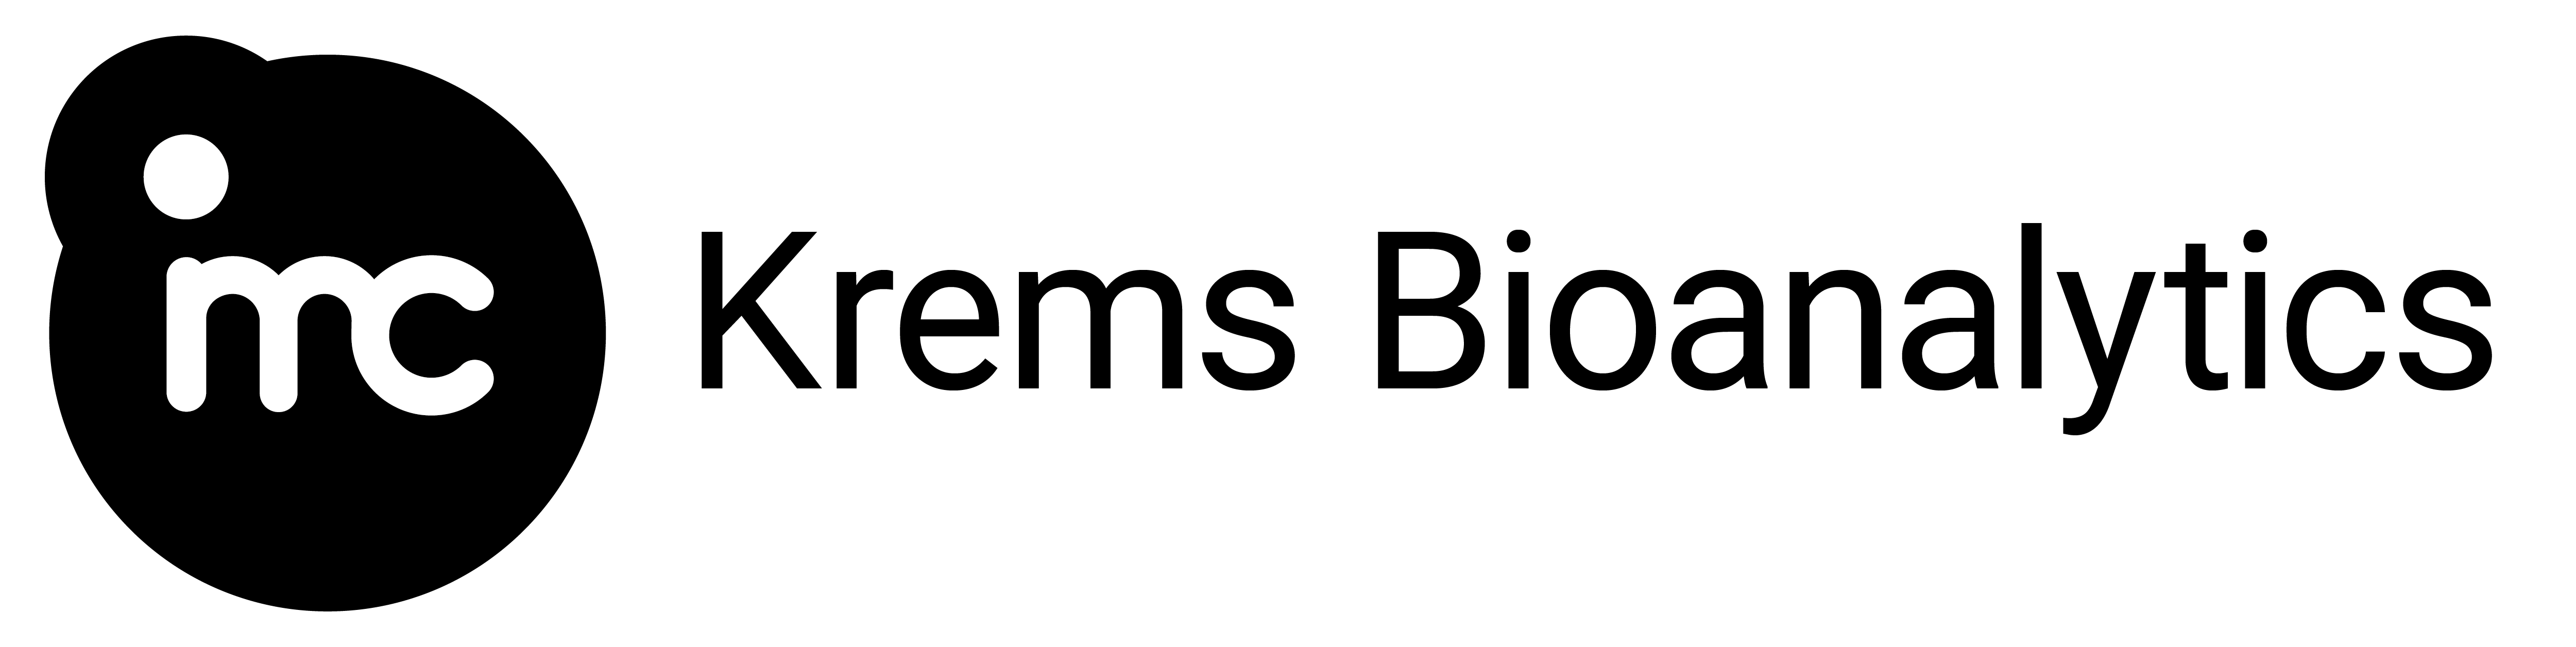 Institute Krems Bioanalytics